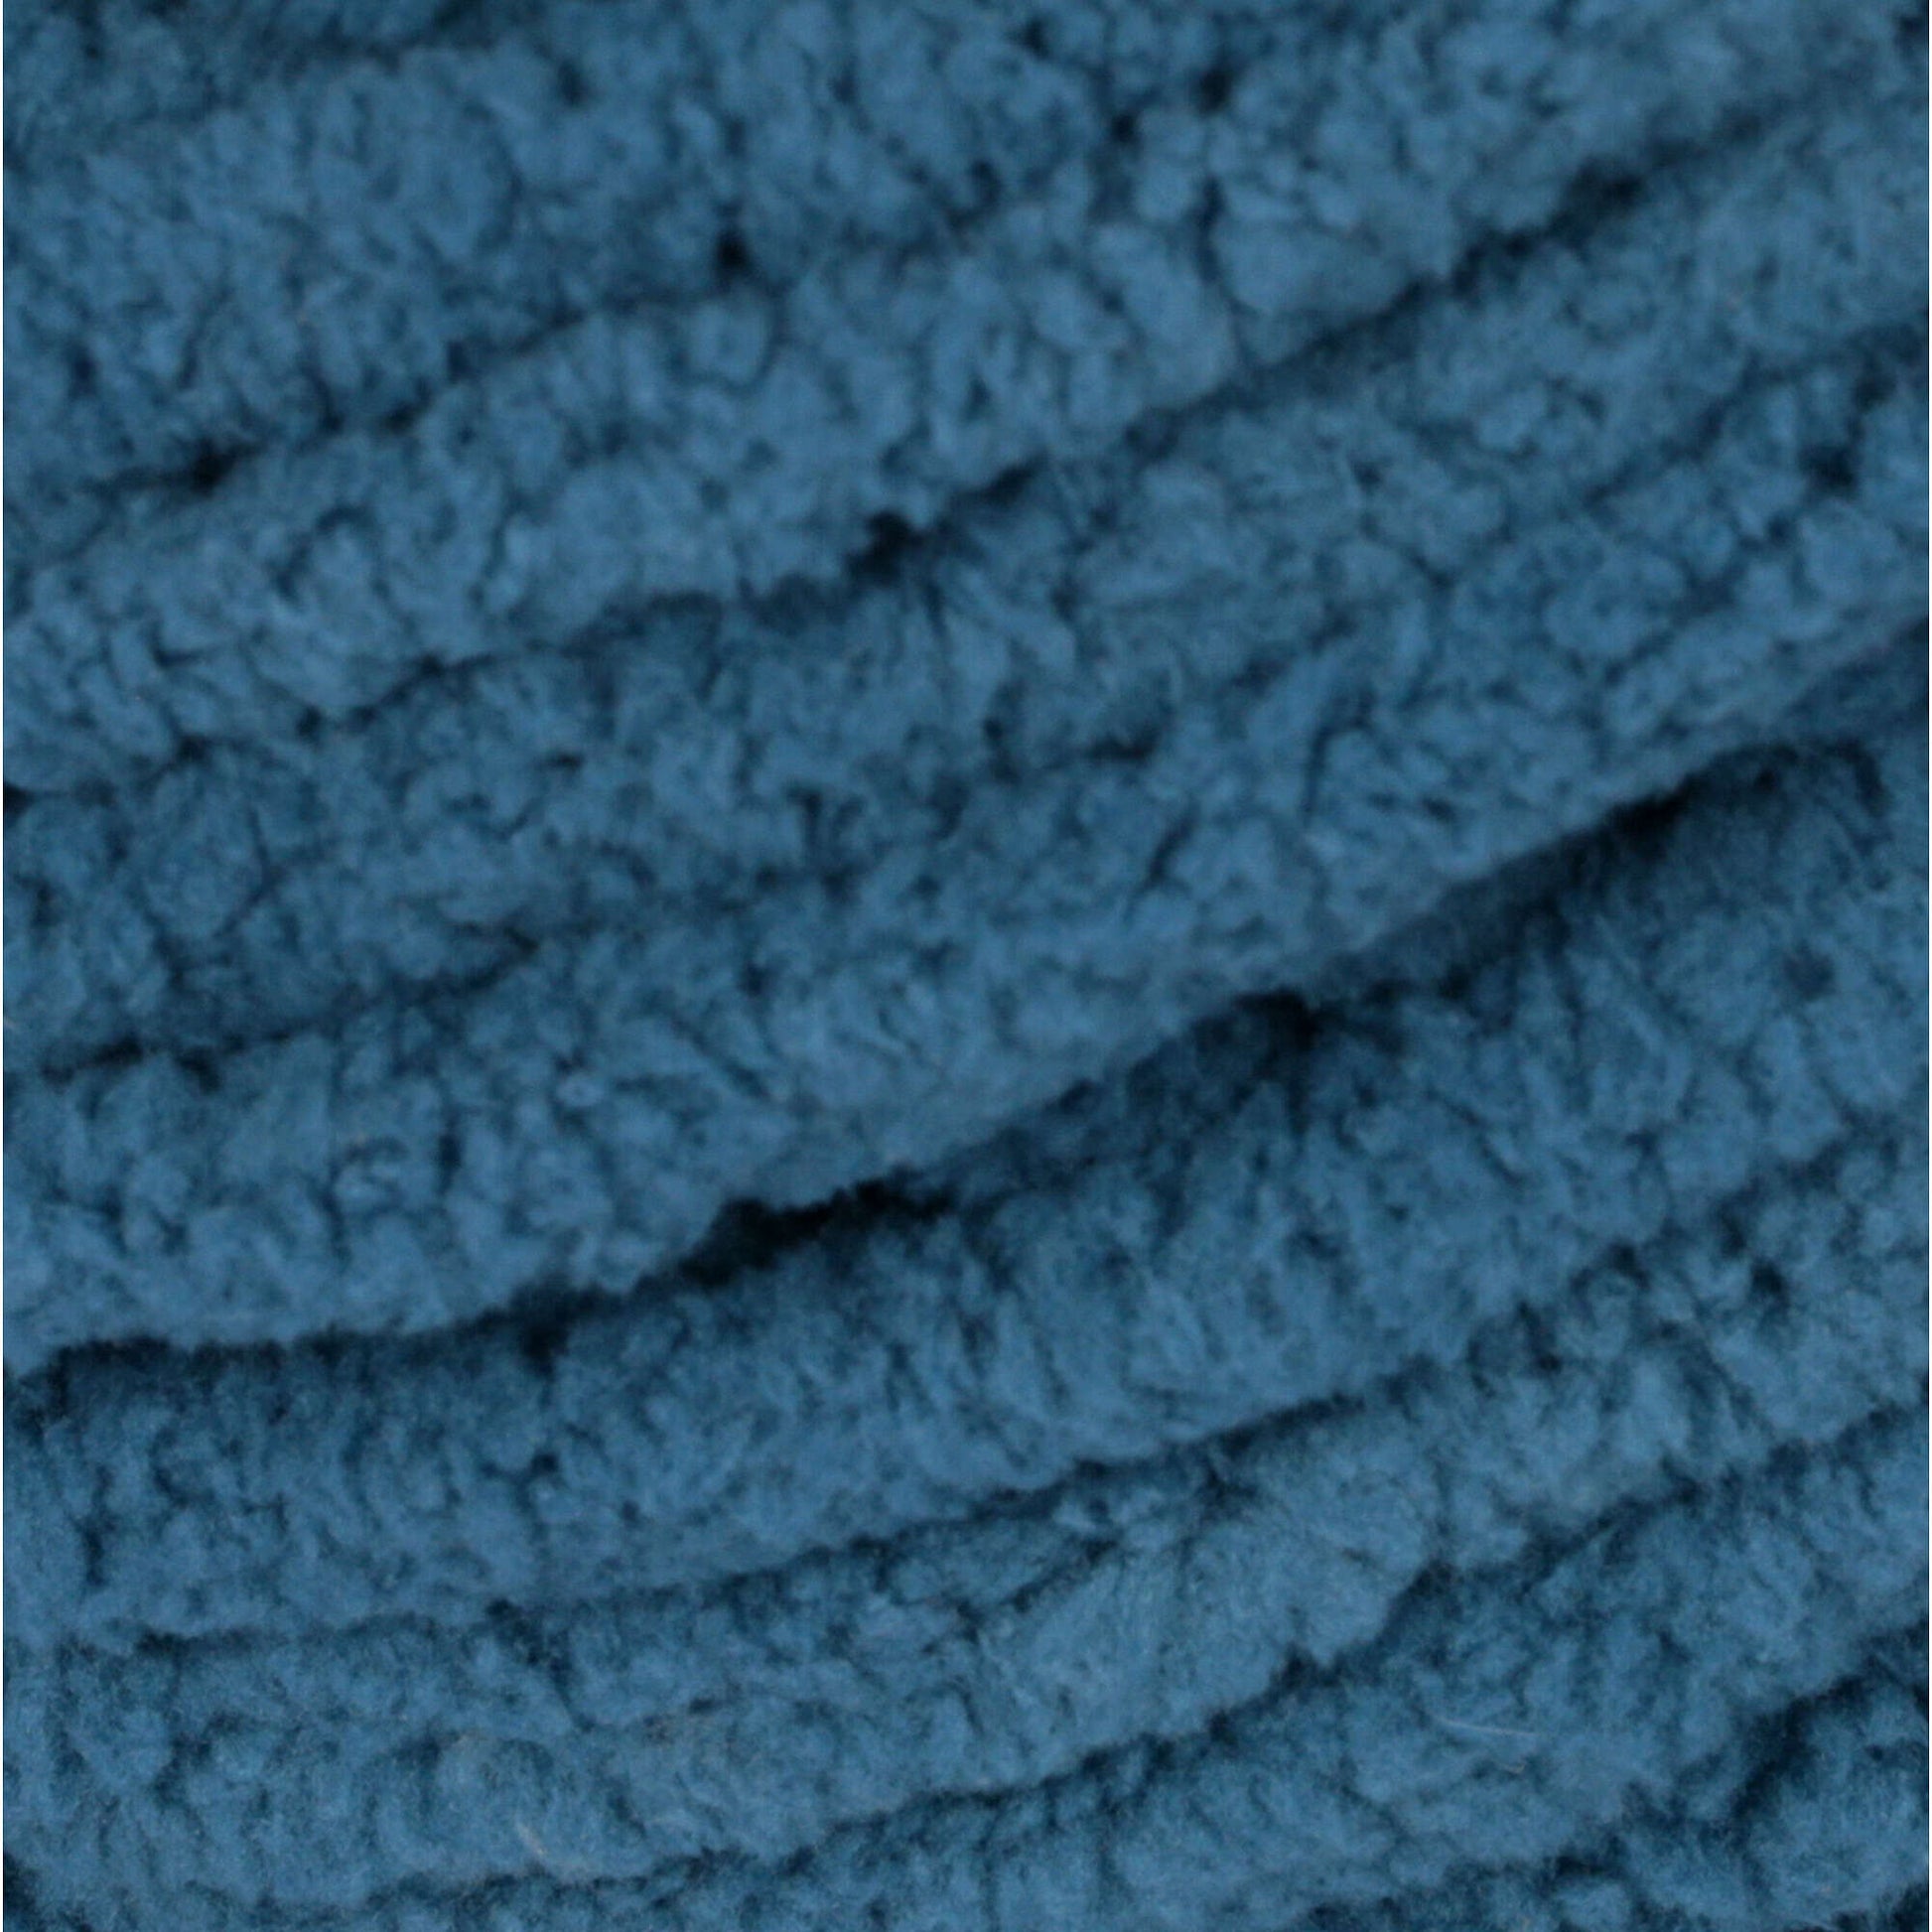 Bernat Blanket Yarn (150 g/5.3 oz) Dark Teal